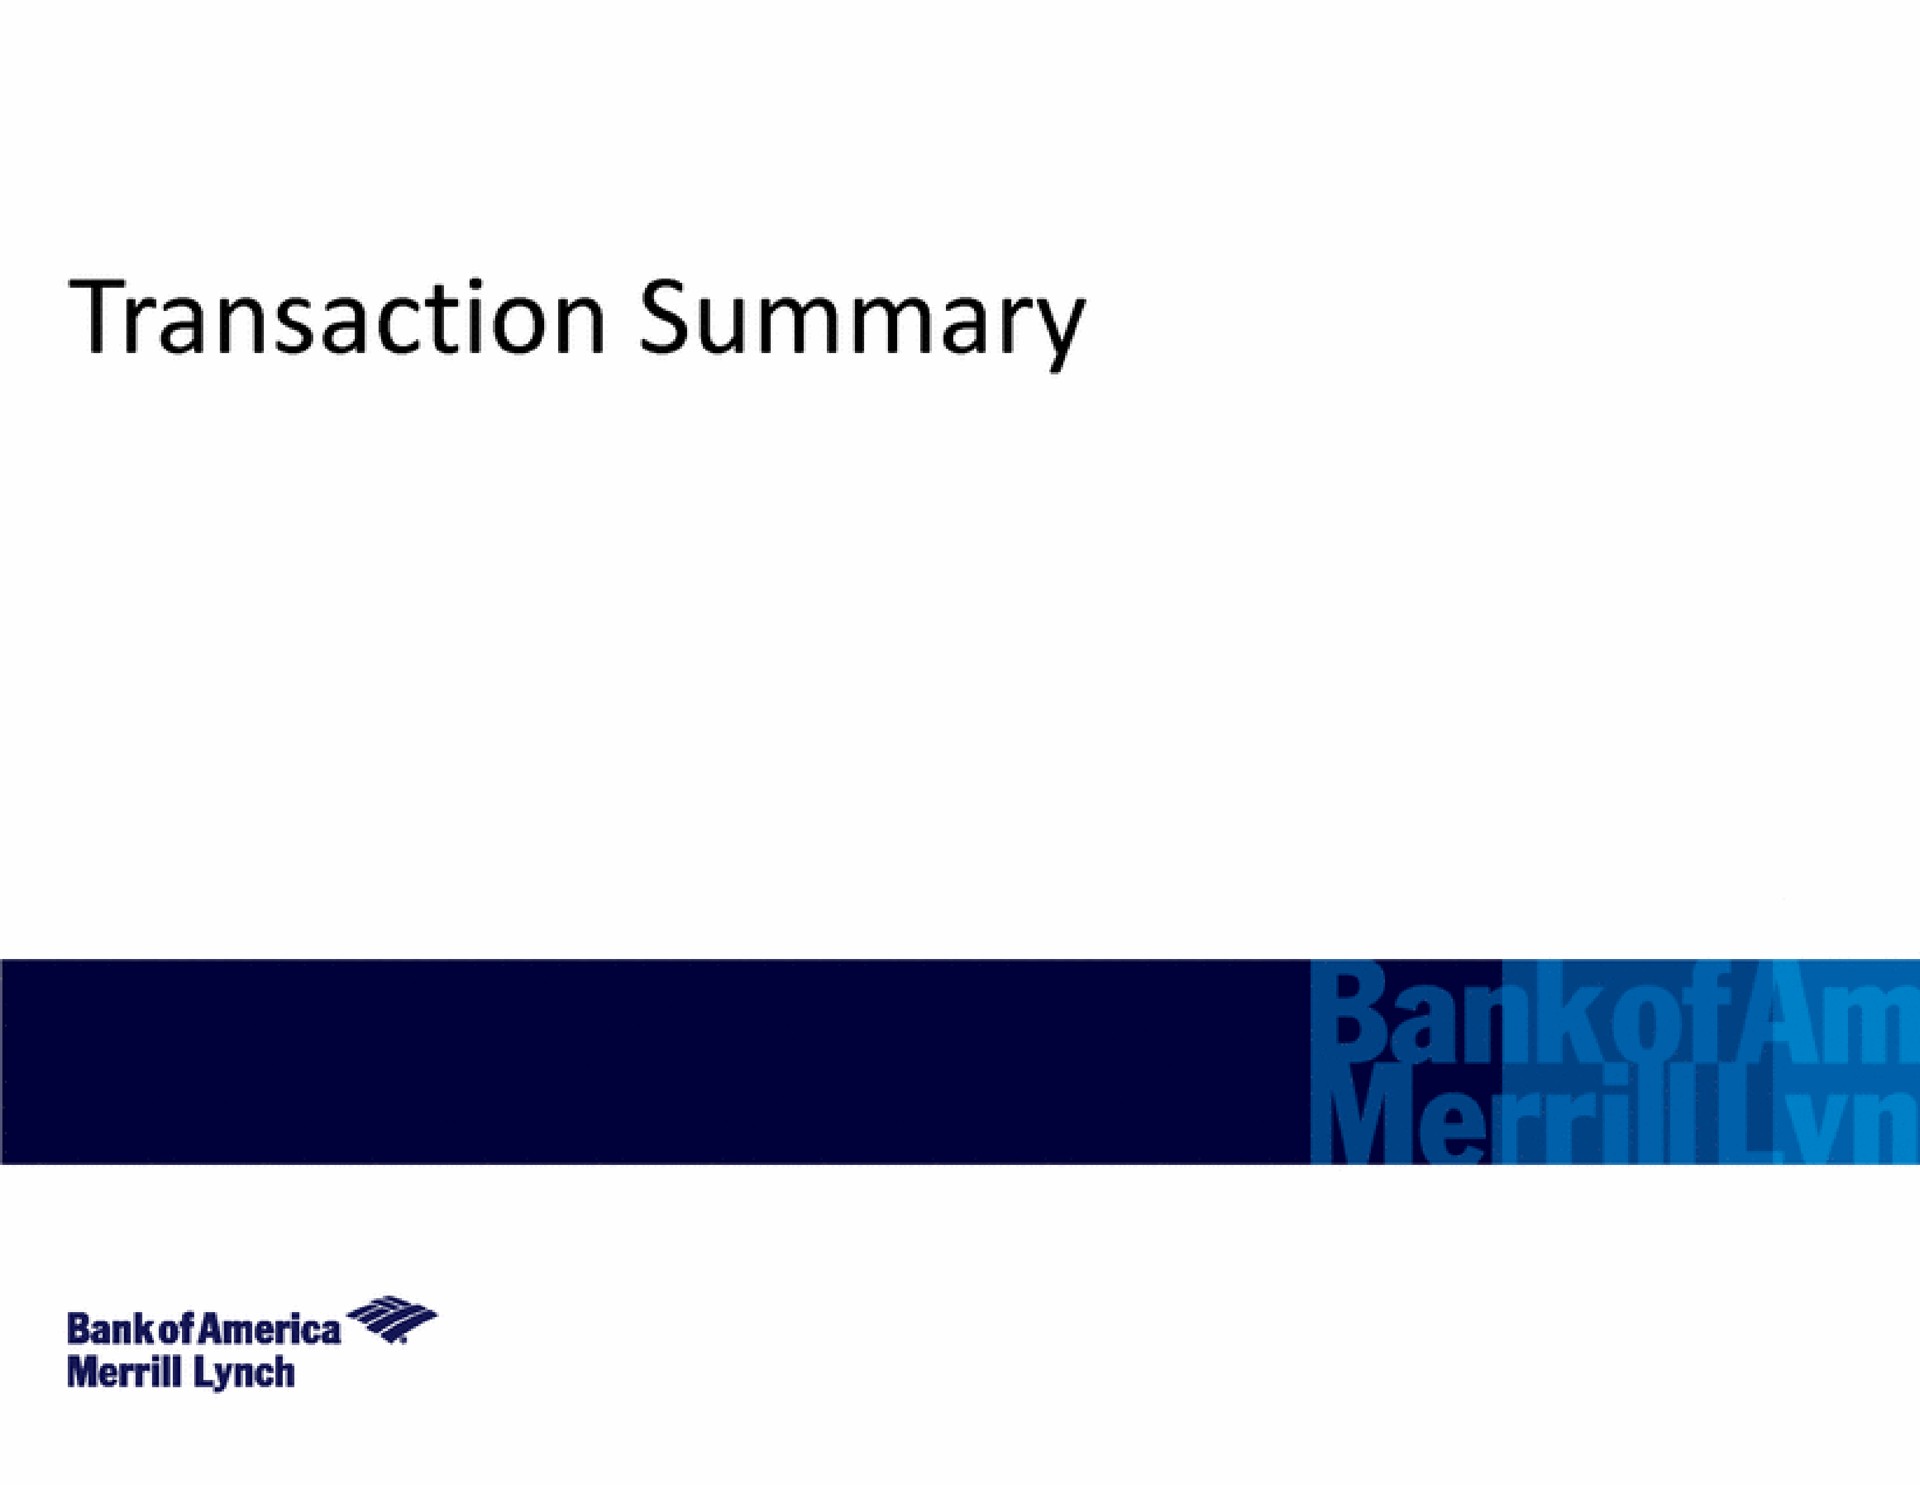 transaction summary lynch | Bank of America